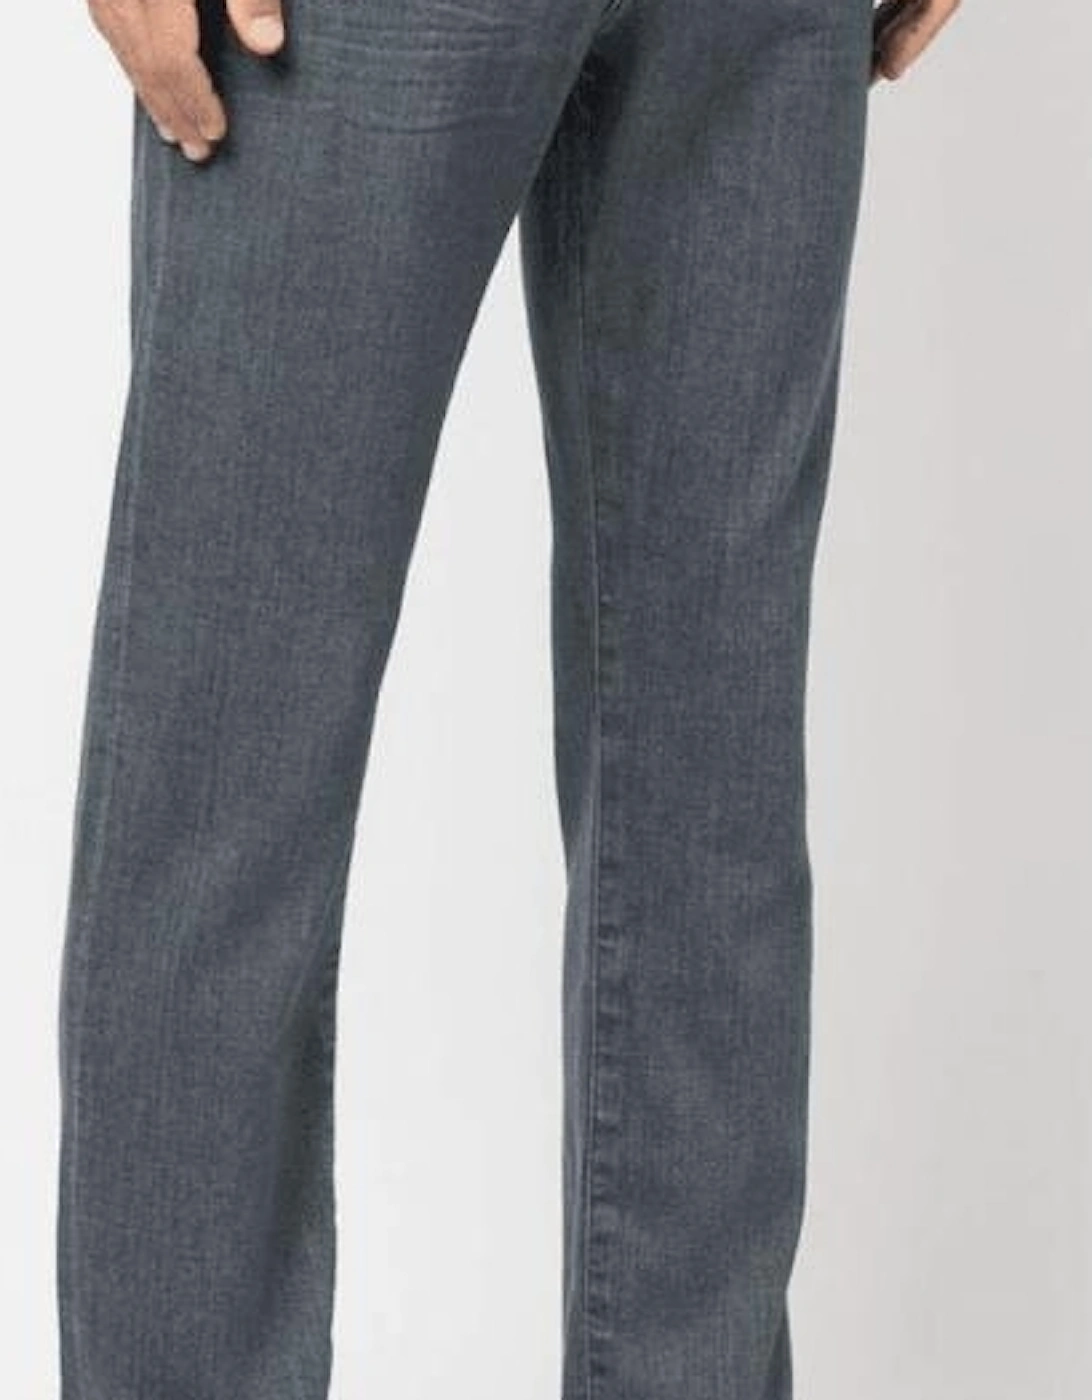 Delaware 3-1 Slim Fit Organic Cotton Grey Jeans